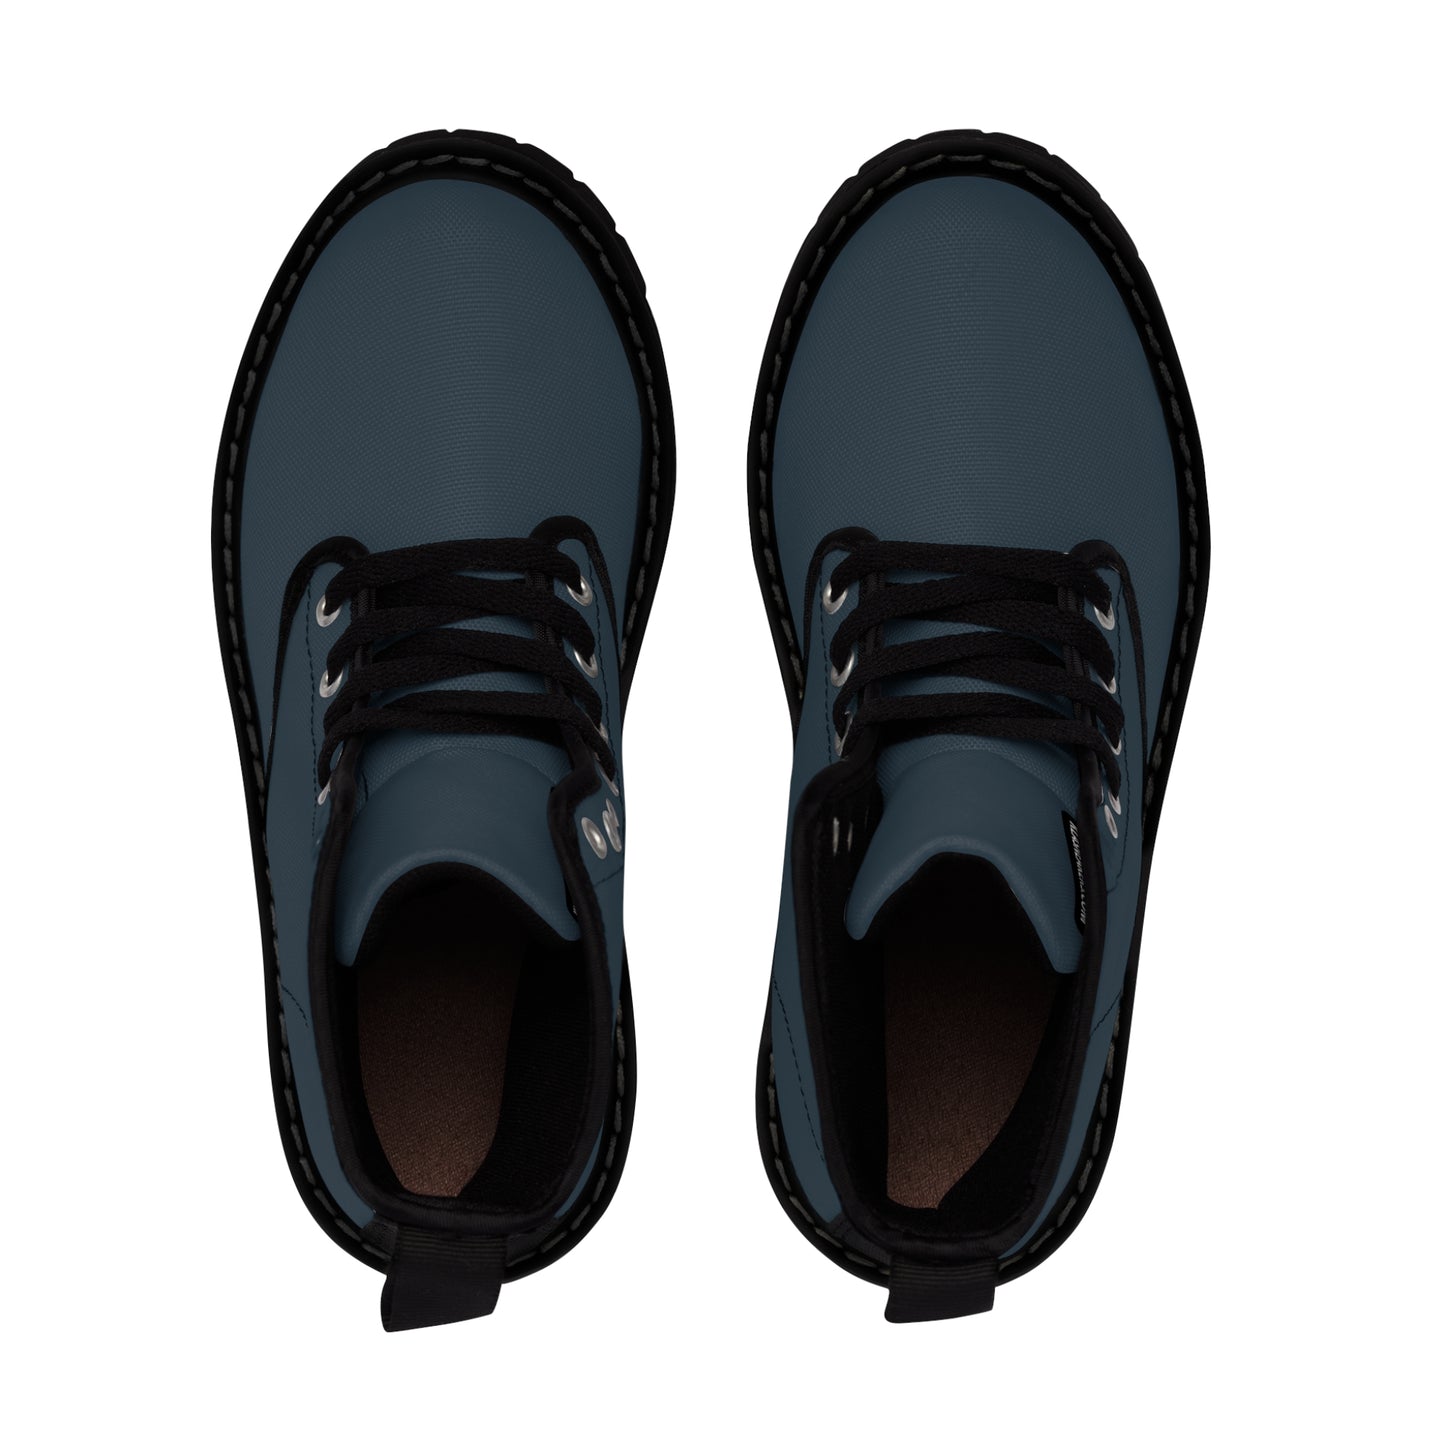 Women's Canvas Boots - Thundercloud Gray US 11 Black sole